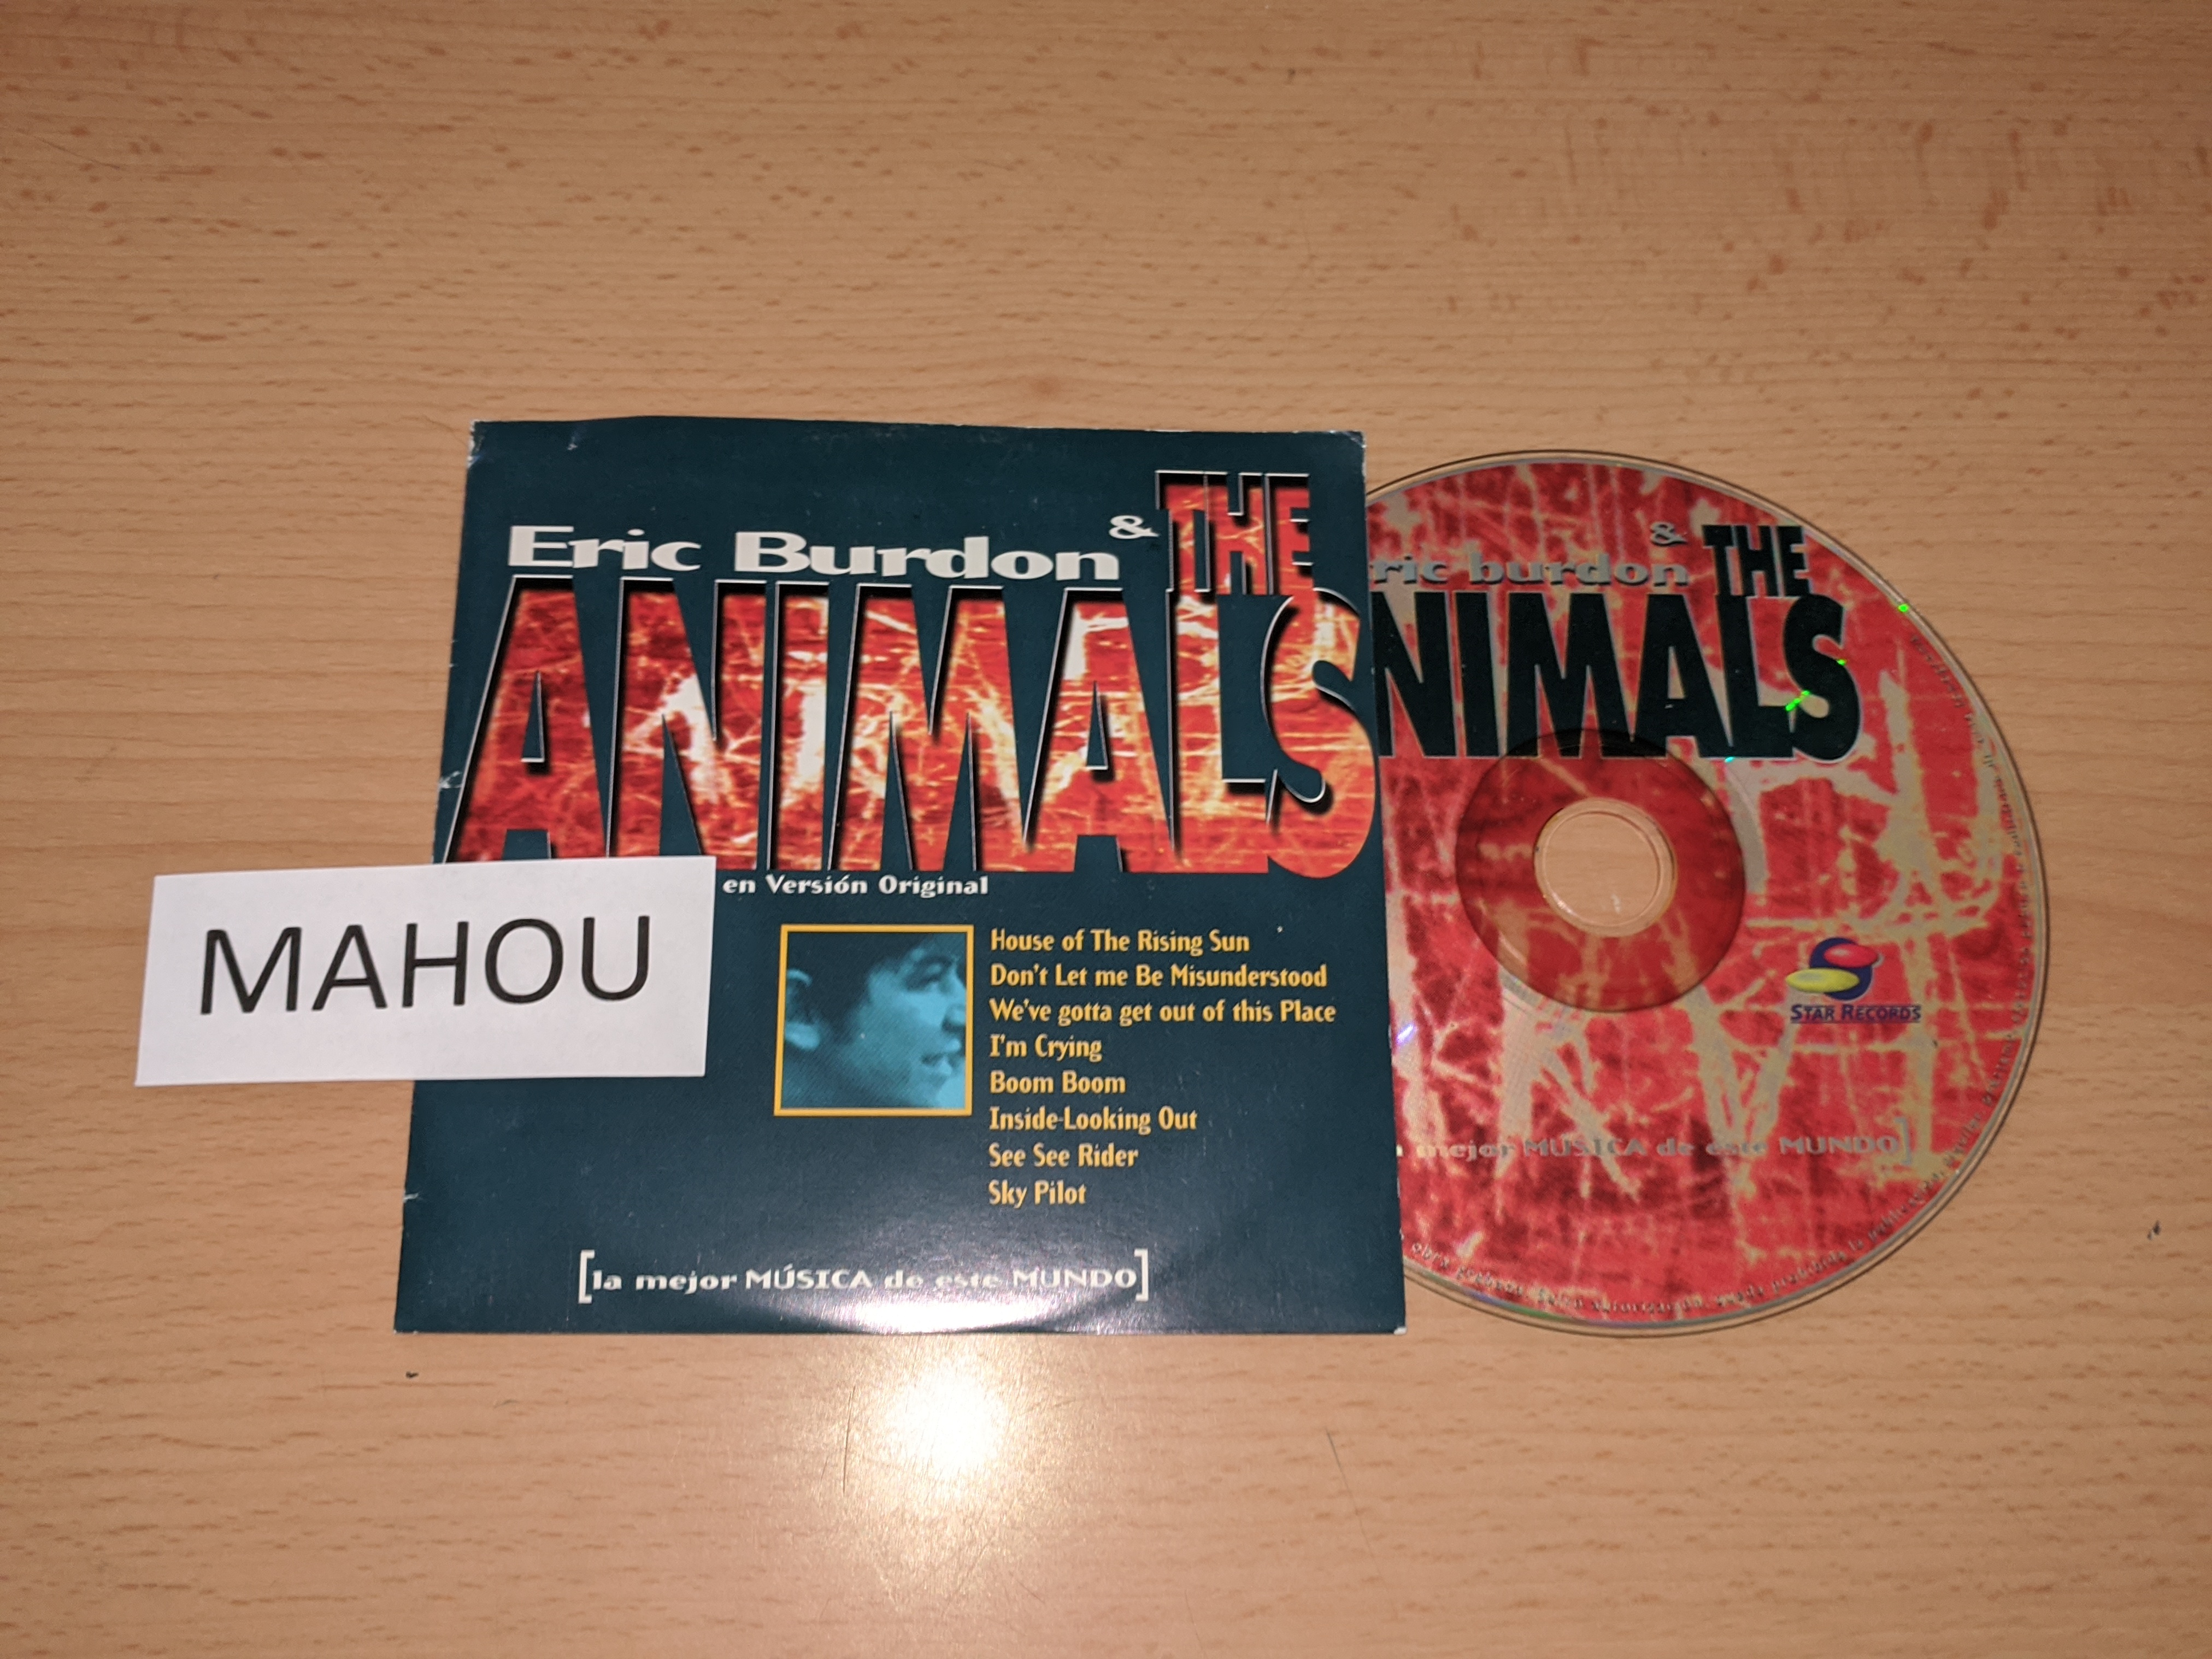 Eric Burdon And The Animals-13 Grandes Exitos En Version Original-CD-FLAC-1998-MAHOU